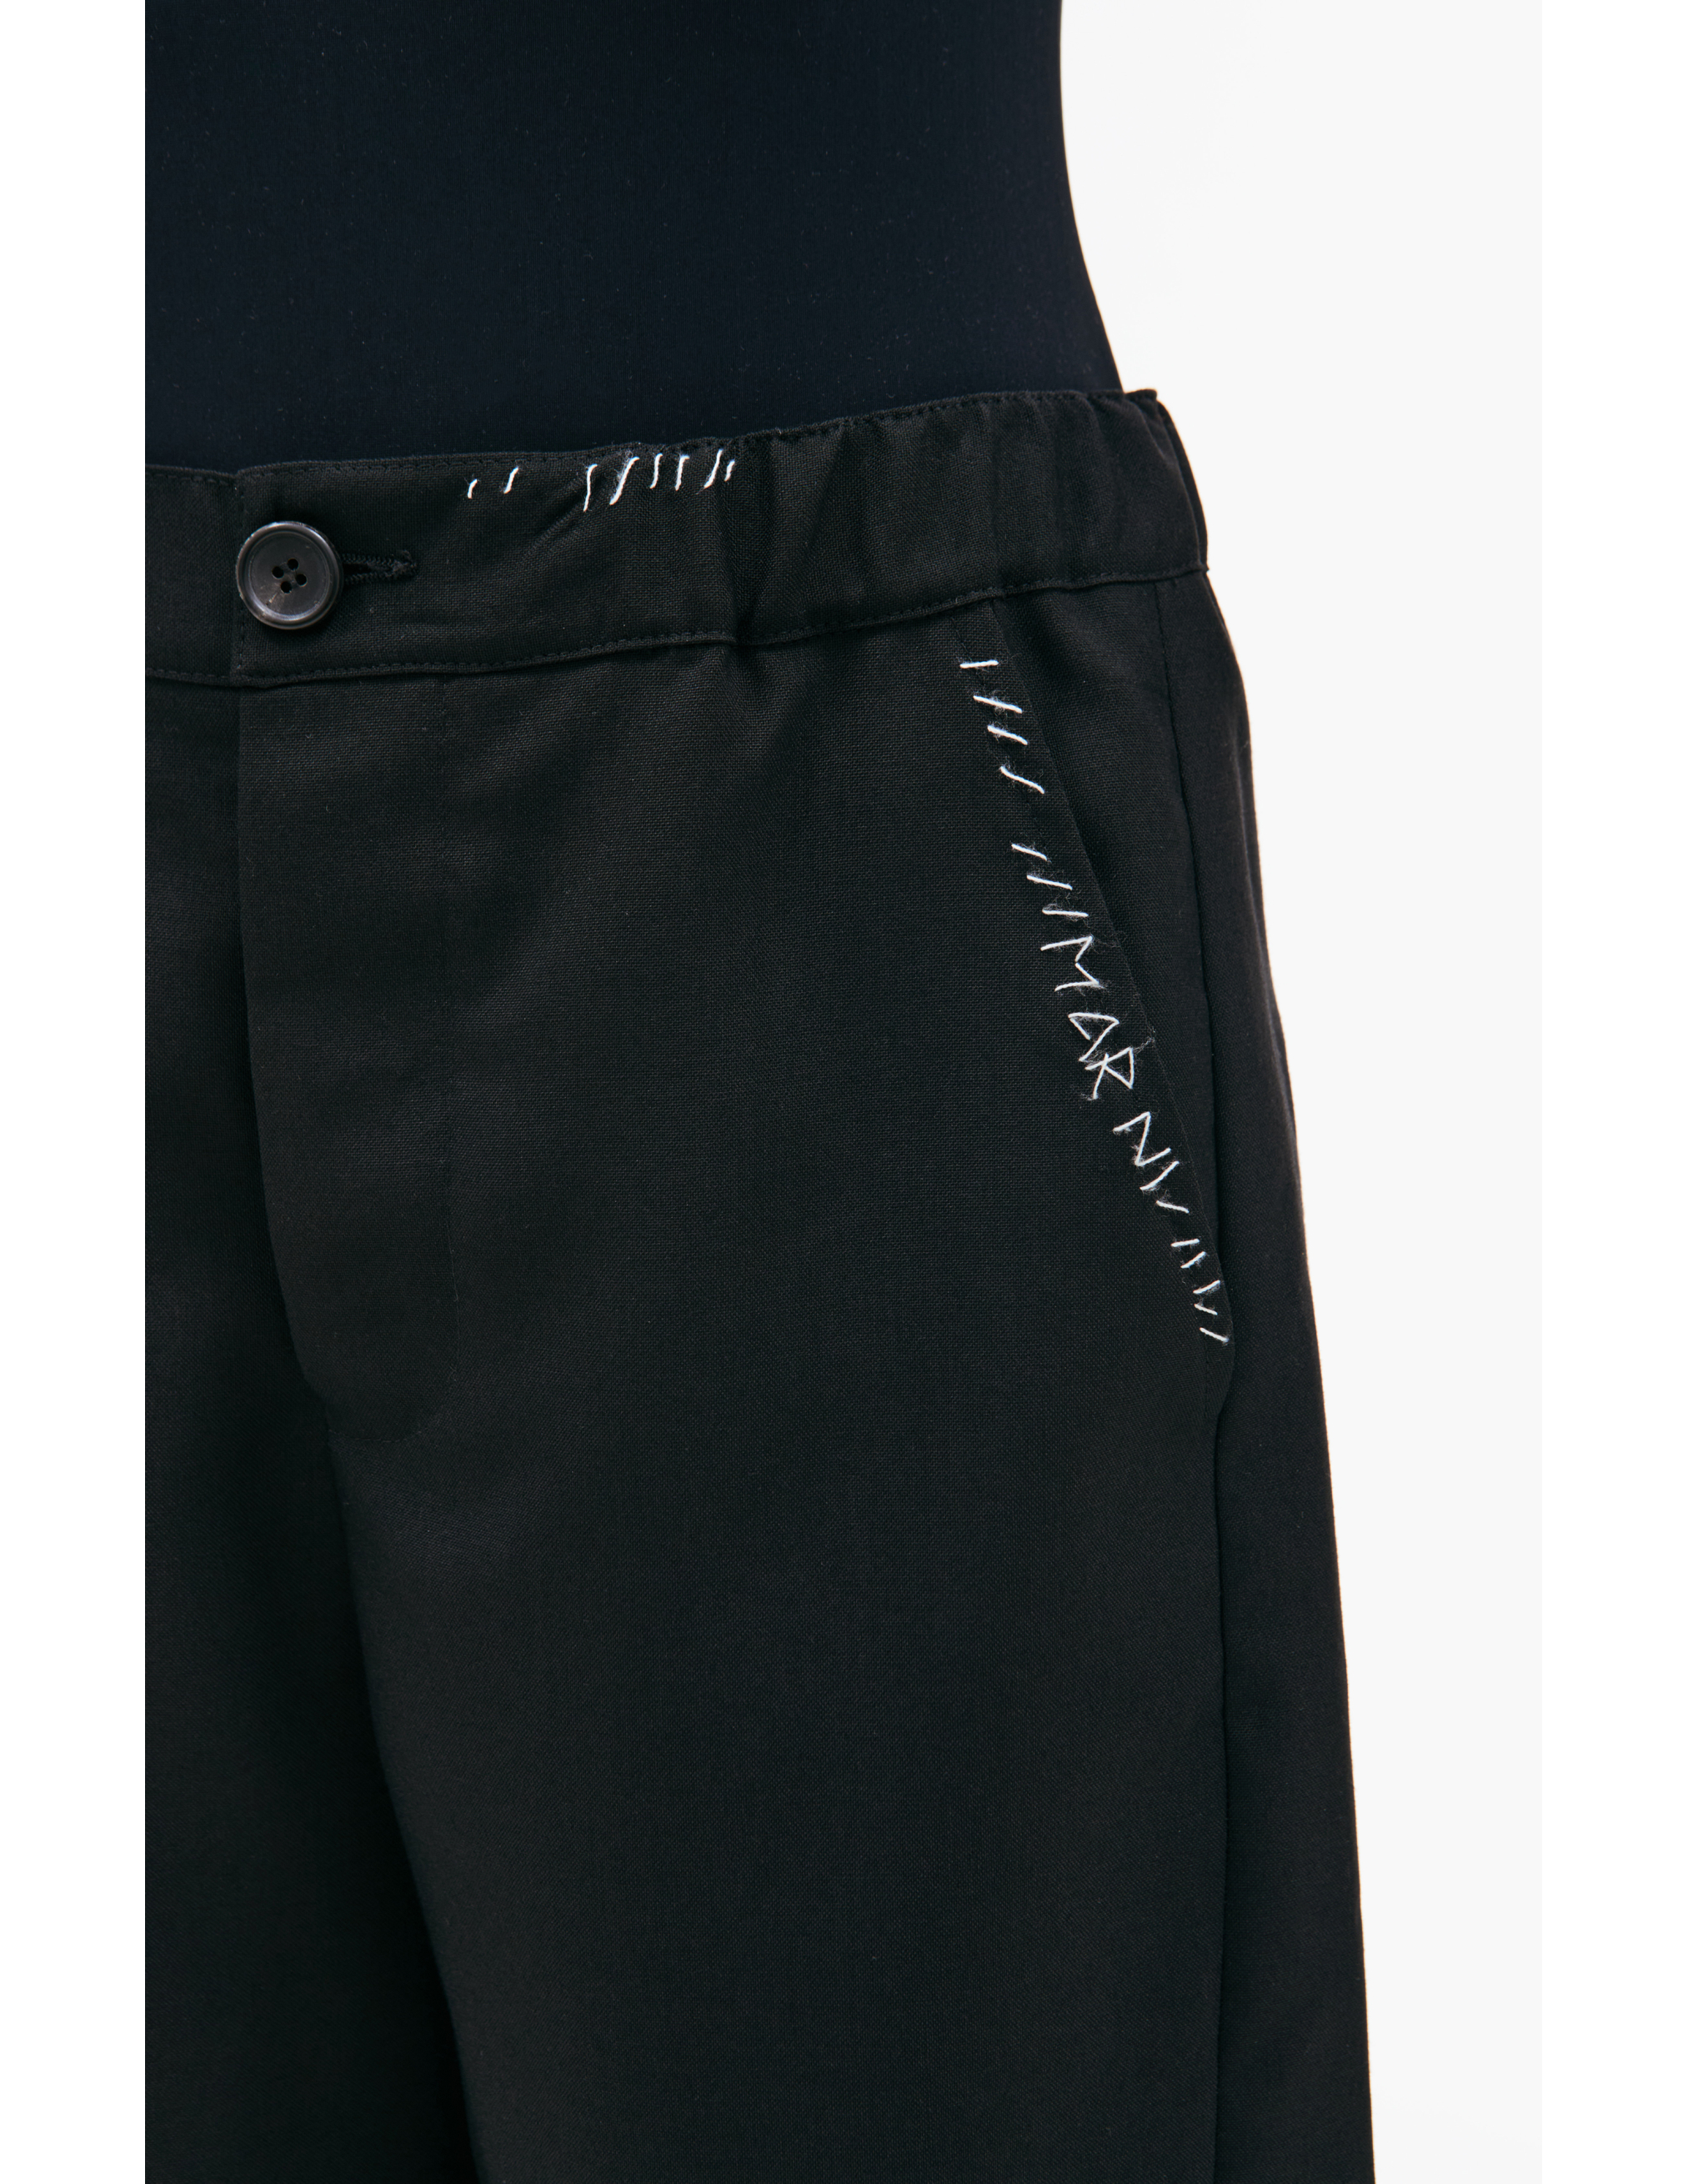 Прямые брюки на резинке Marni PAMA0482SU/TW839/00N99, размер 40;42 PAMA0482SU/TW839/00N99 - фото 4